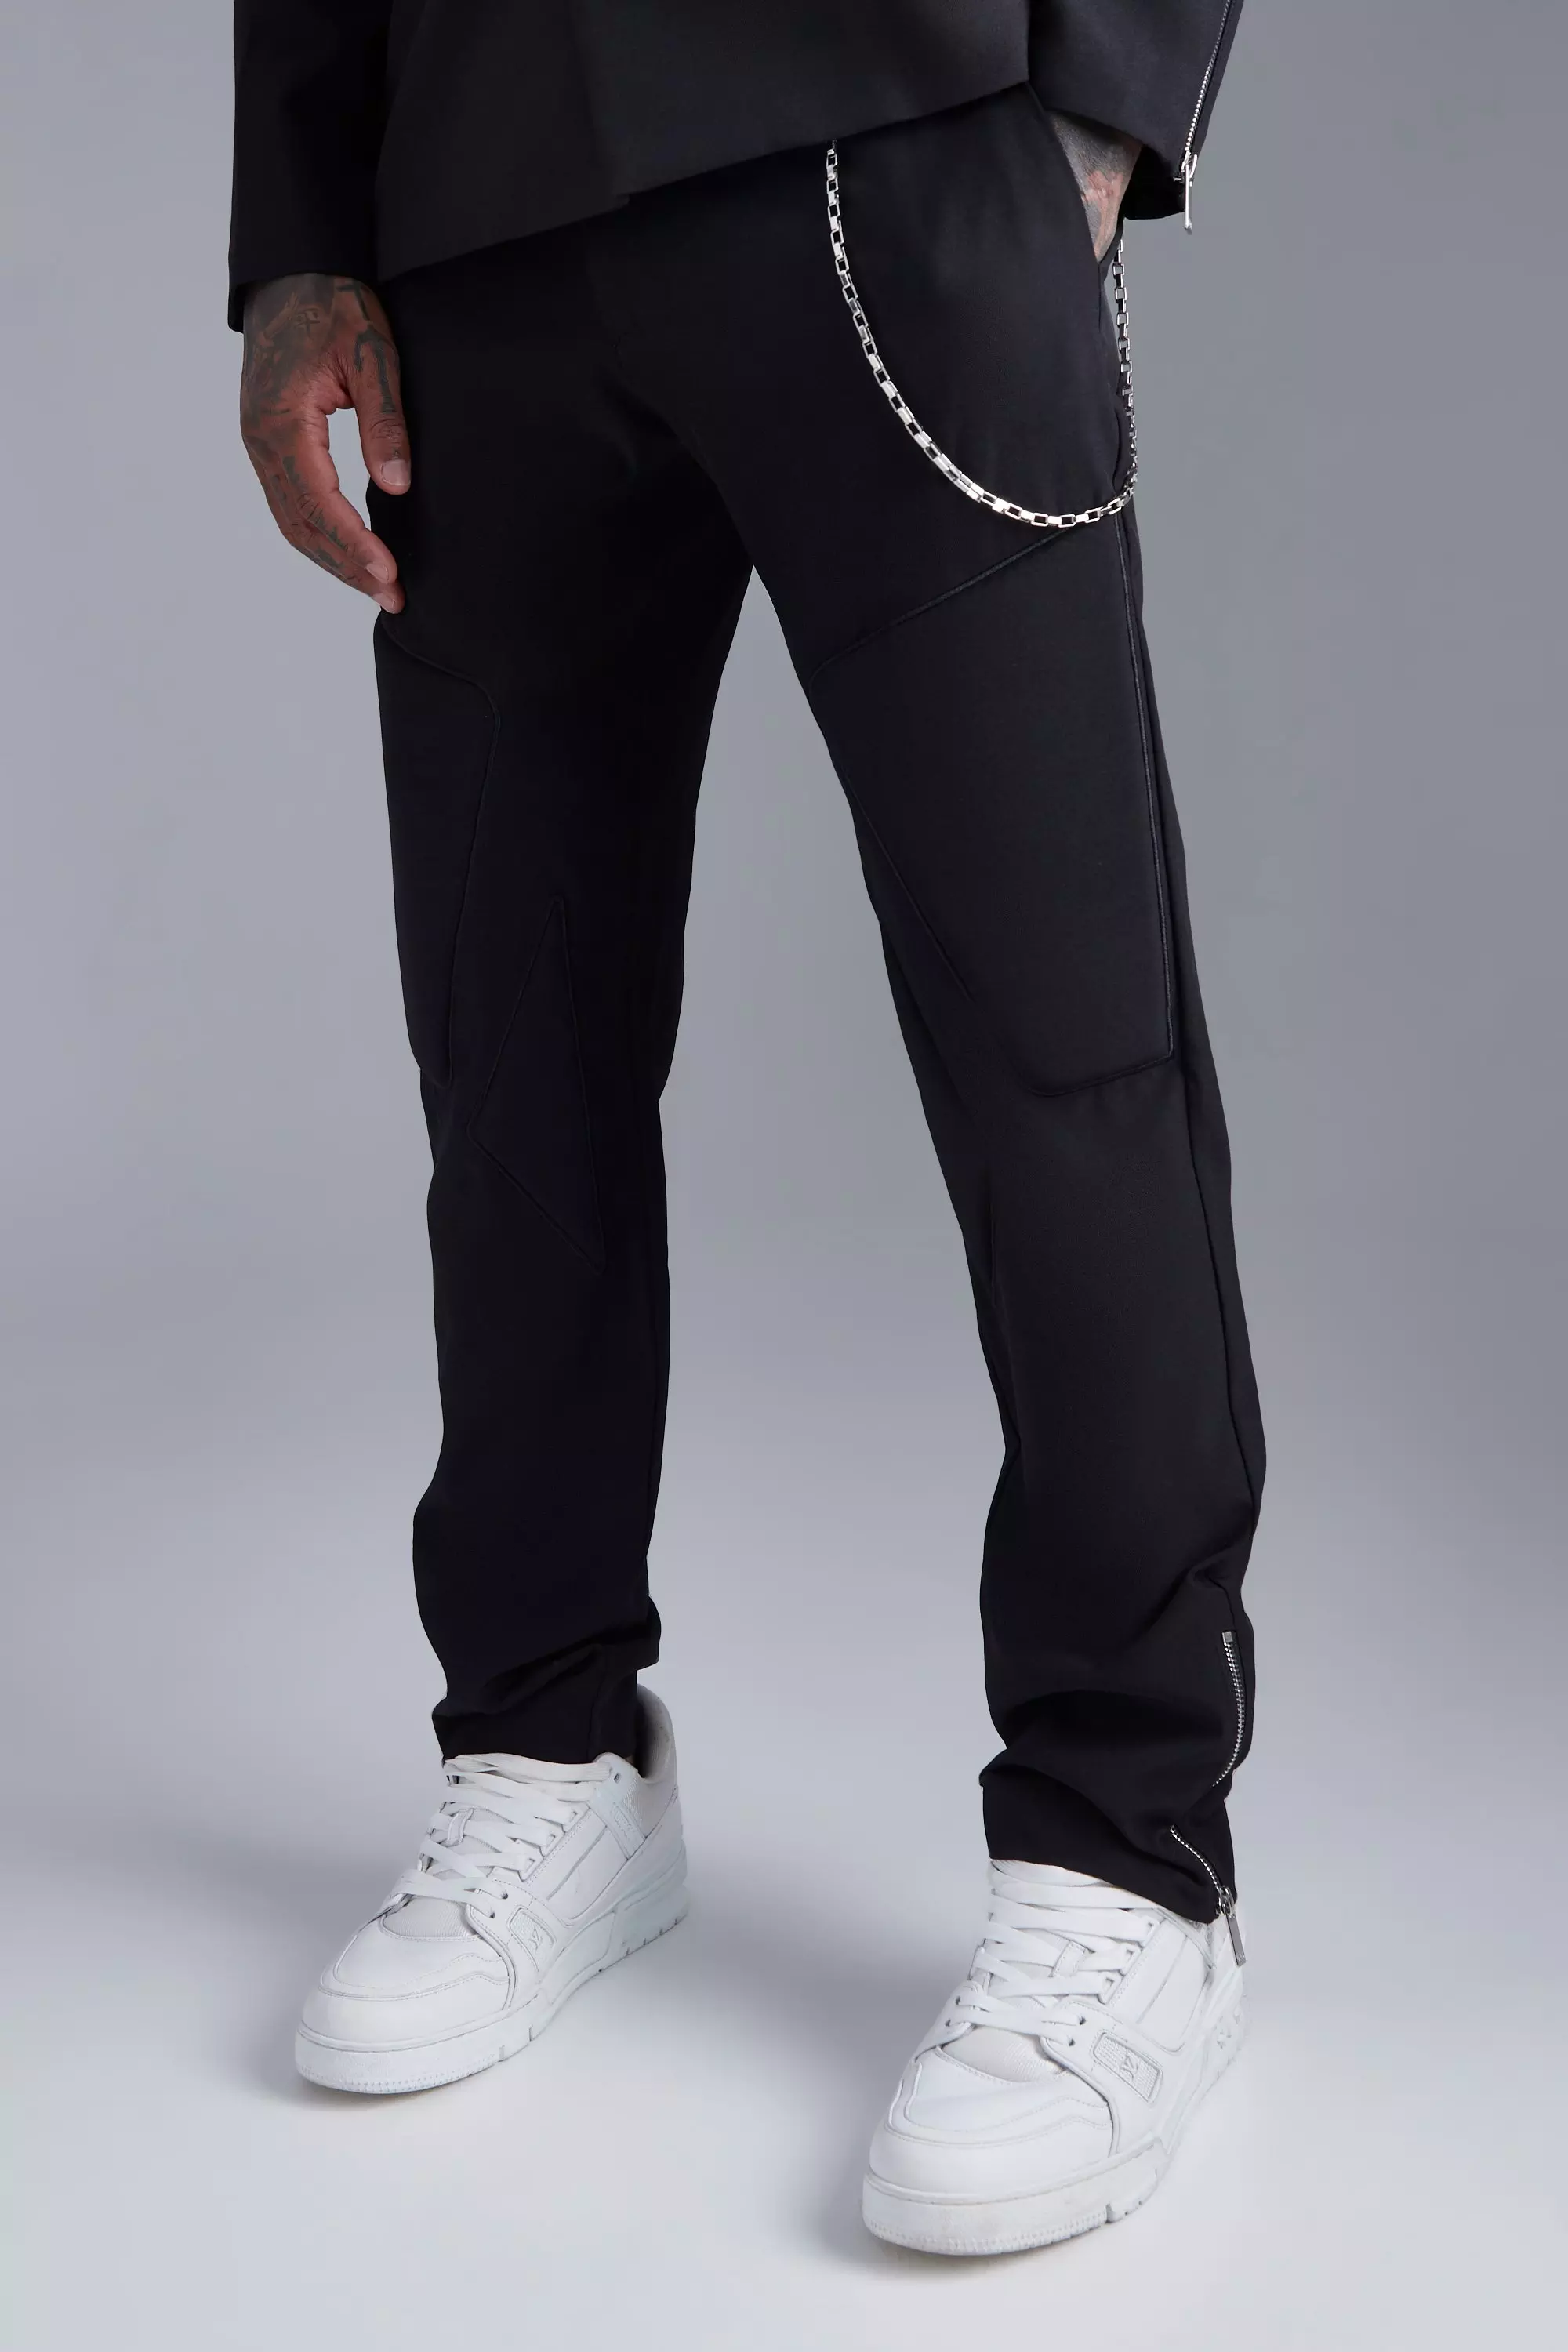 Chain Slim Zip Suit Pants Black